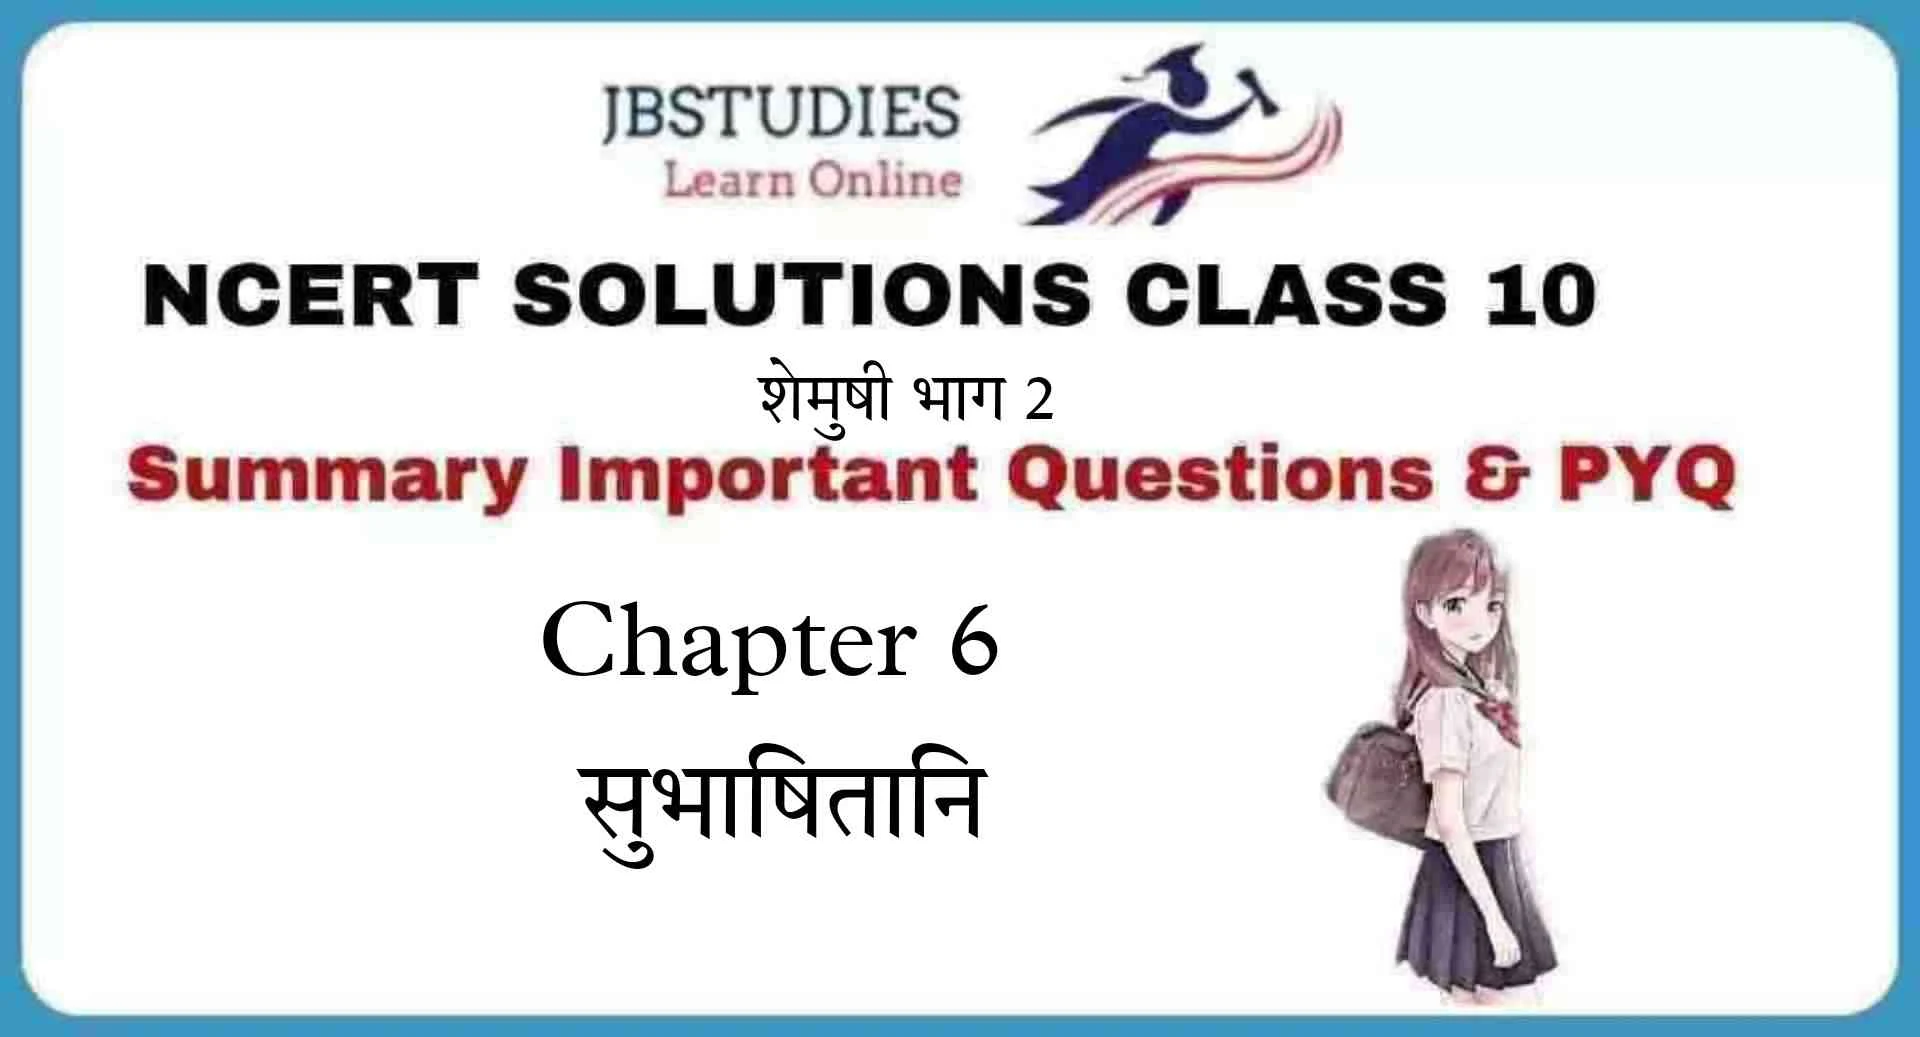 Solutions Class 10 शेमुषी भाग 2 Chapter-6 (सुभाषितानि)